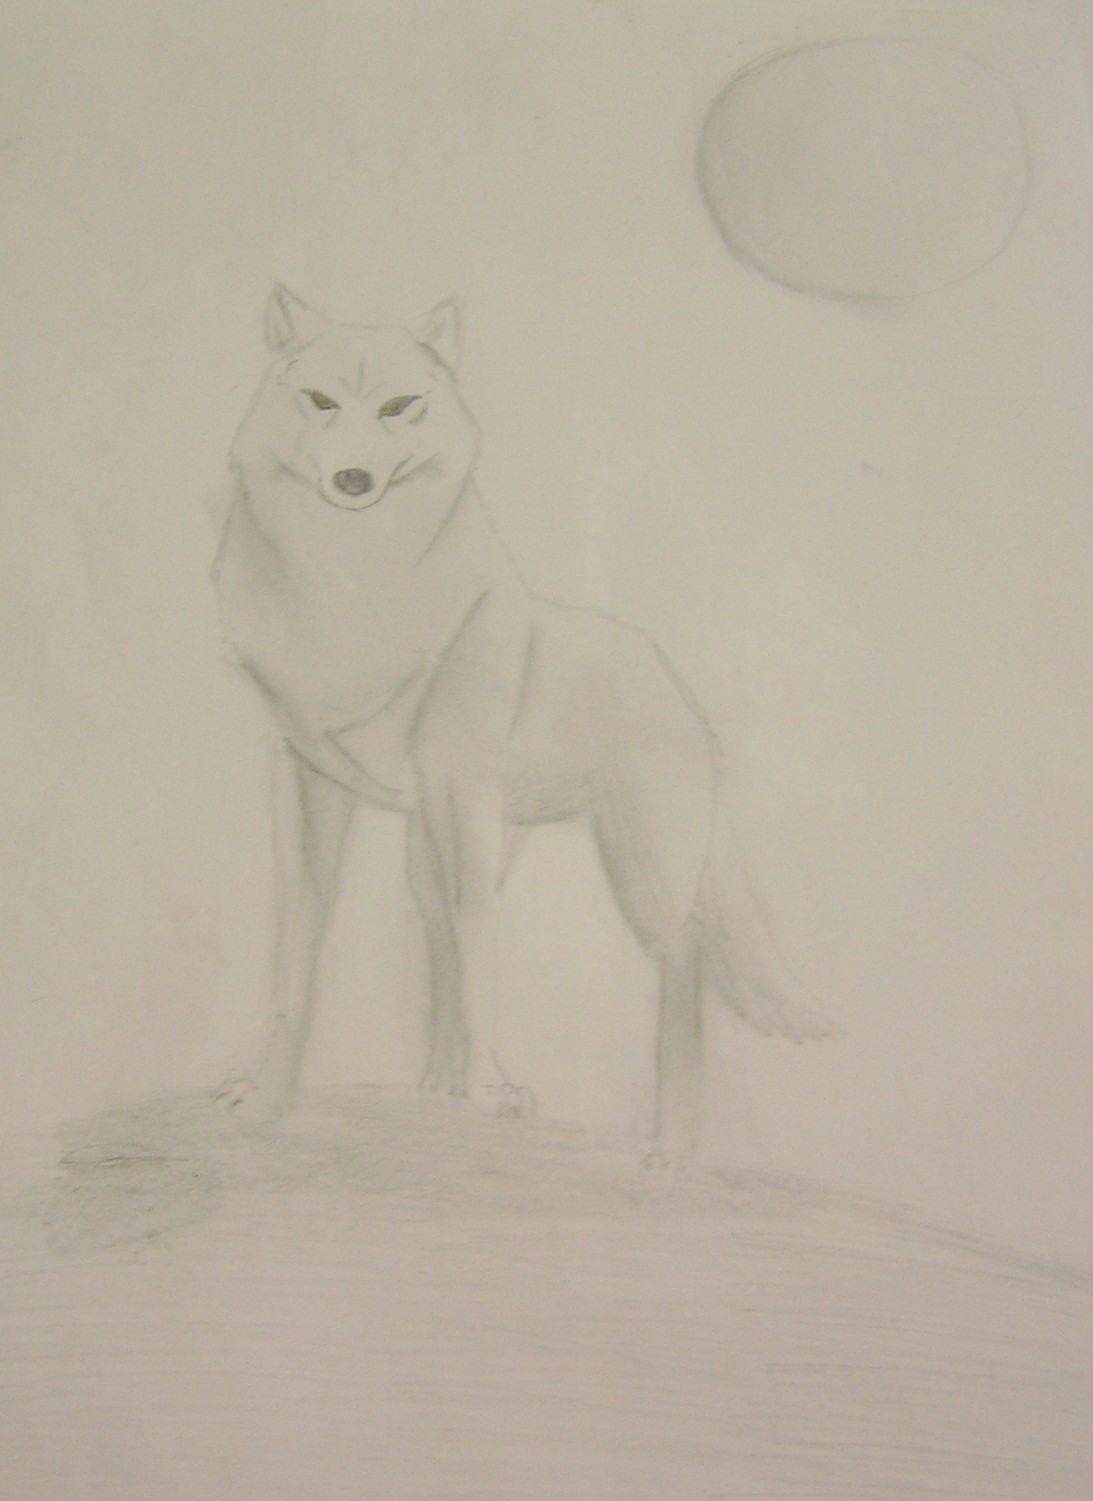 Kiba The White Wolf by XxATLsGreatestxX